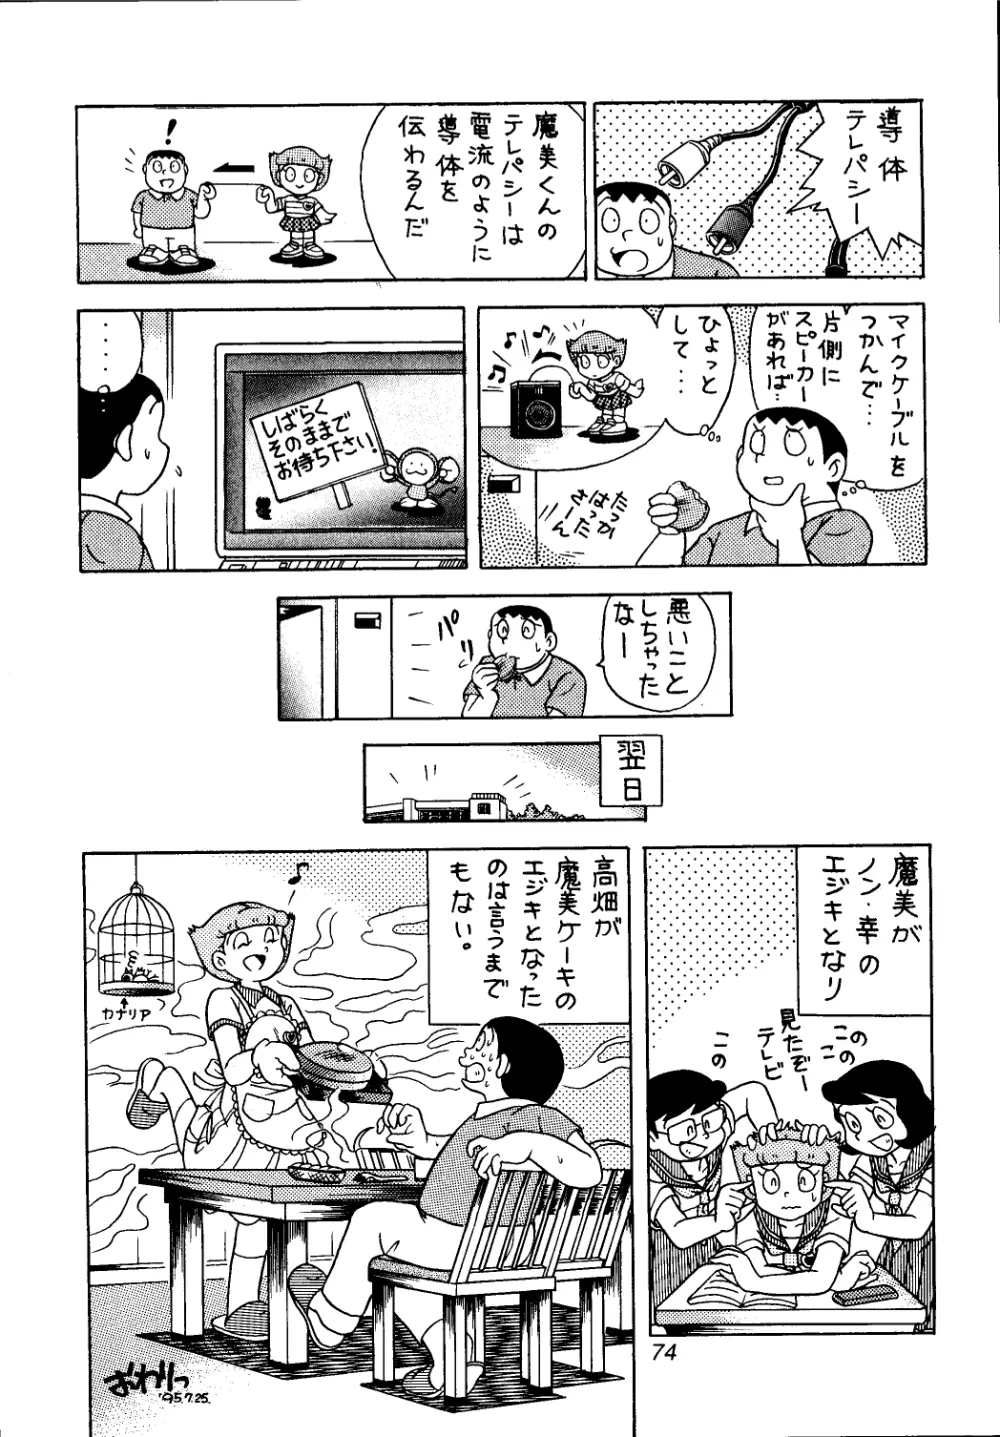 佐倉魔美誘致計画 - page74